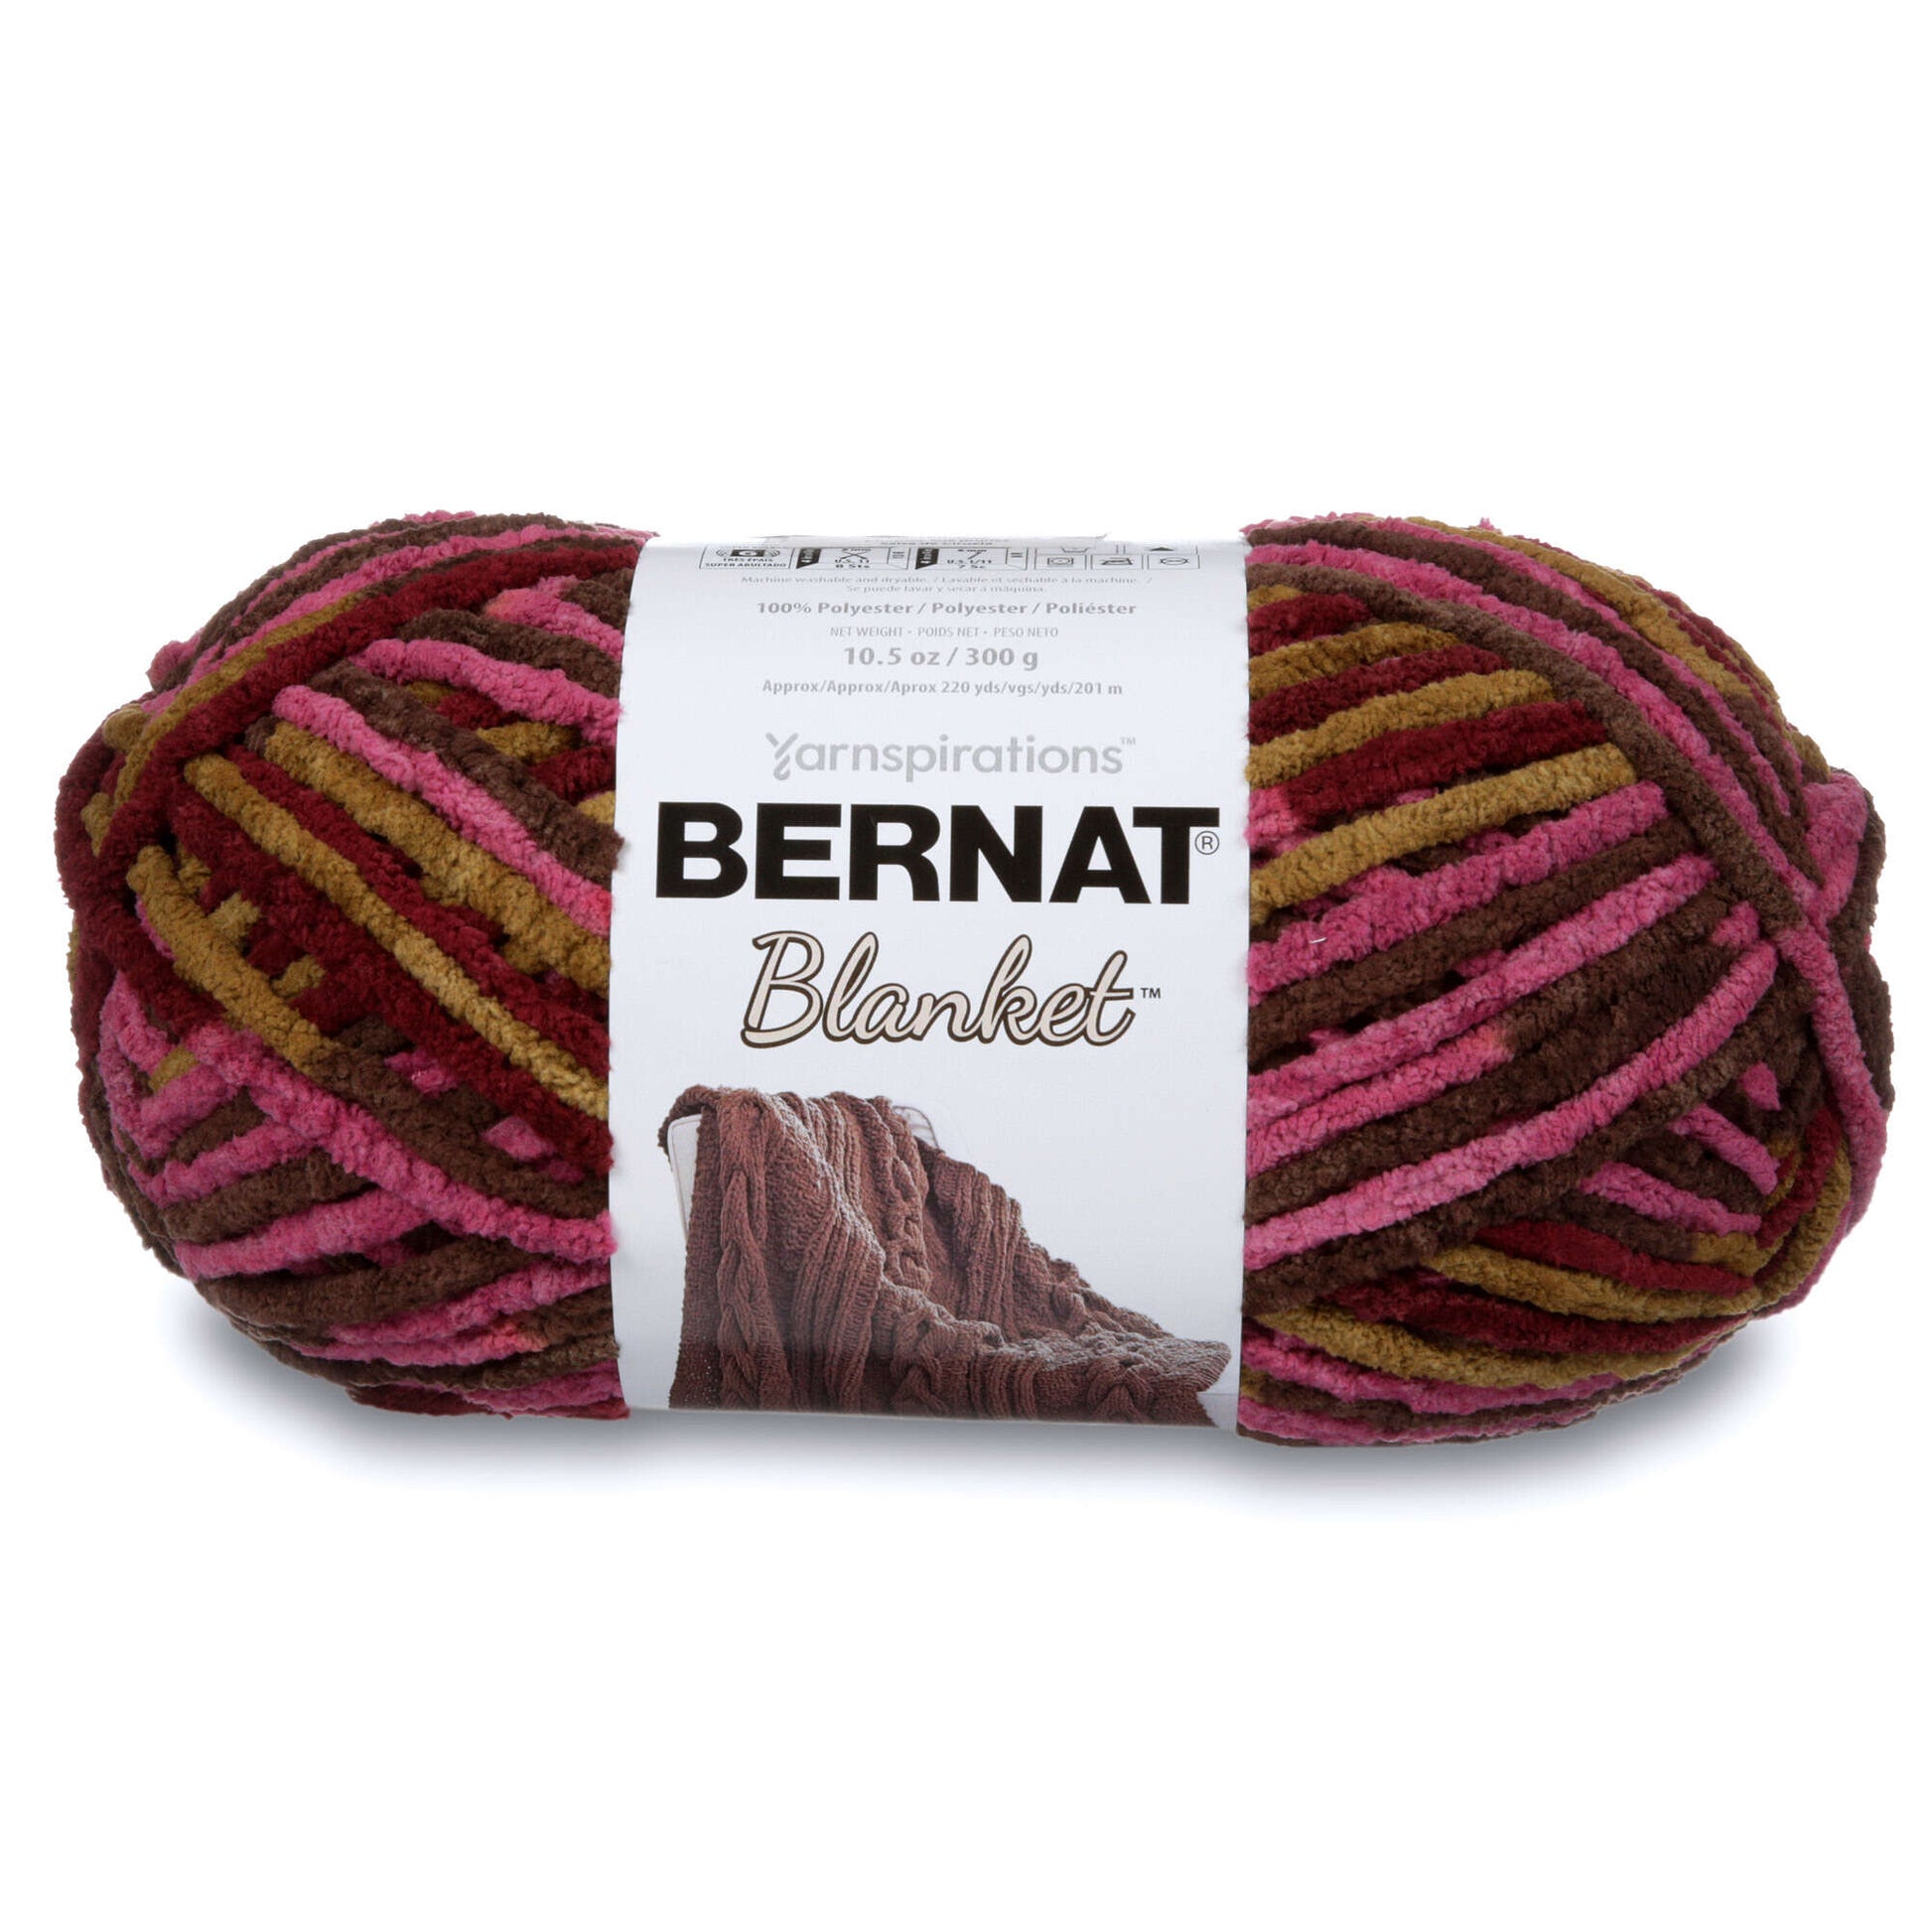 Bernat Blanket Yarn (300g/10.5oz) Plum Chutney